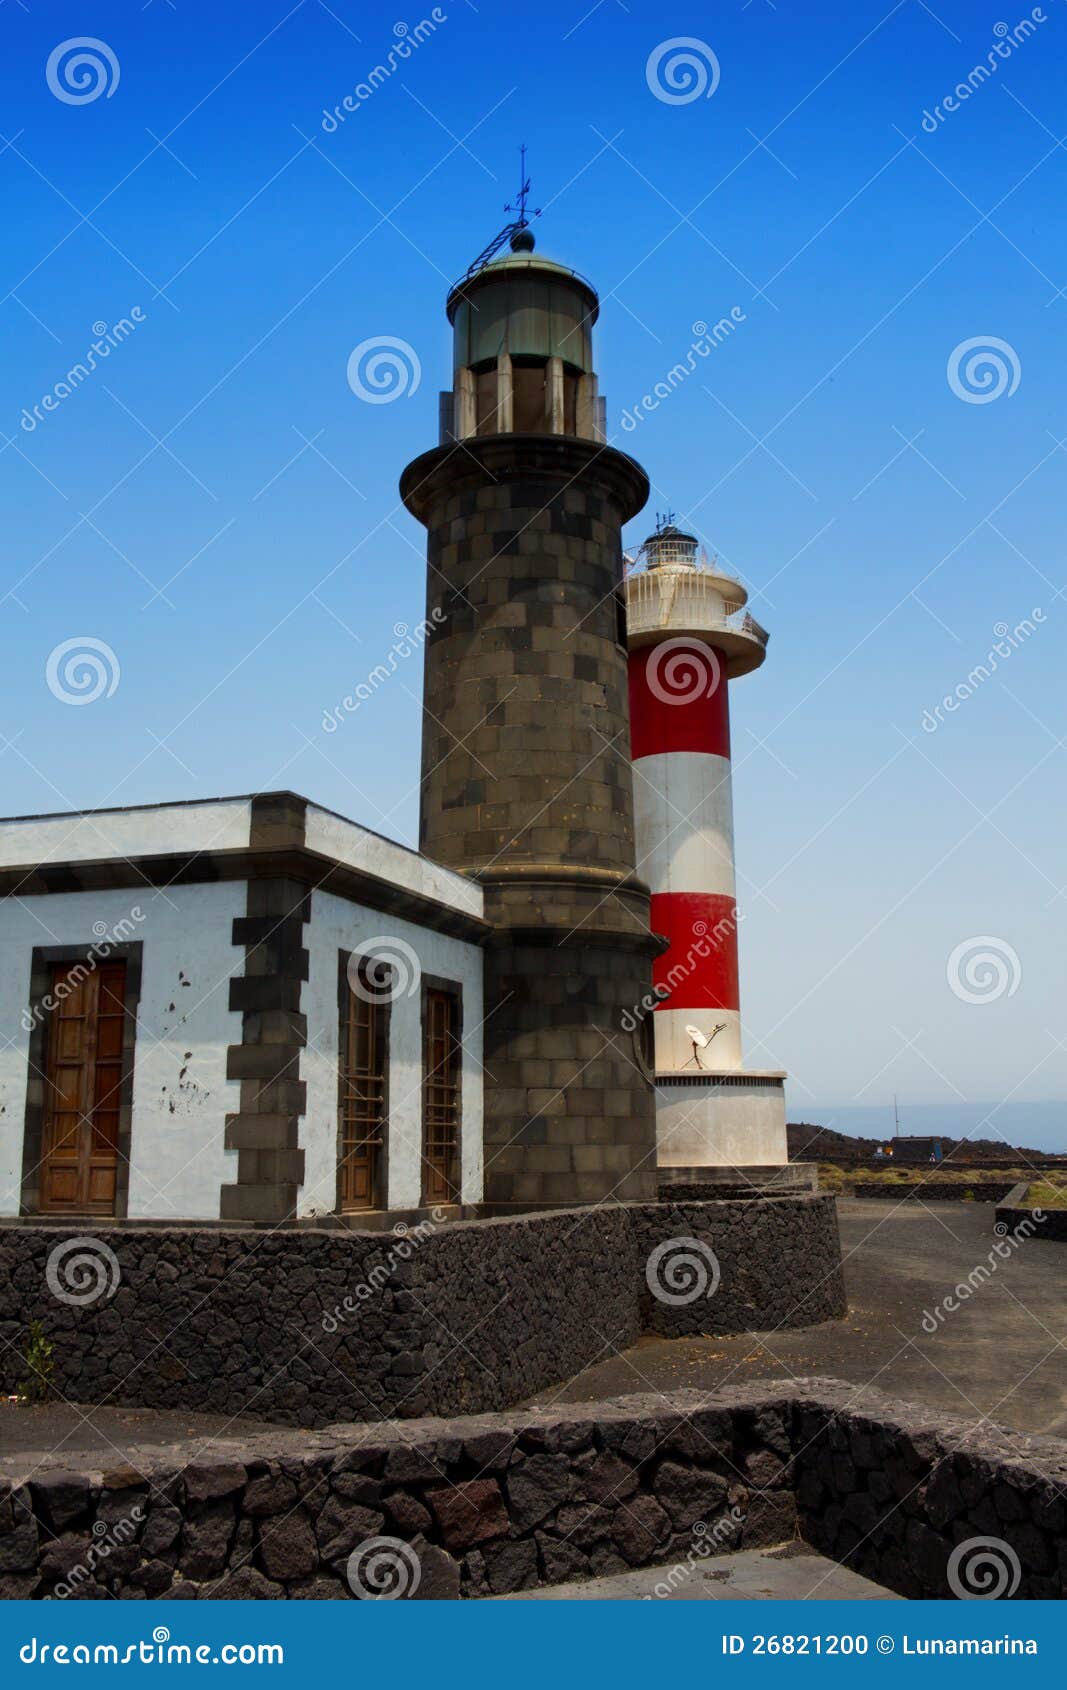 la palma fuencaliente lighthouse in saltworks